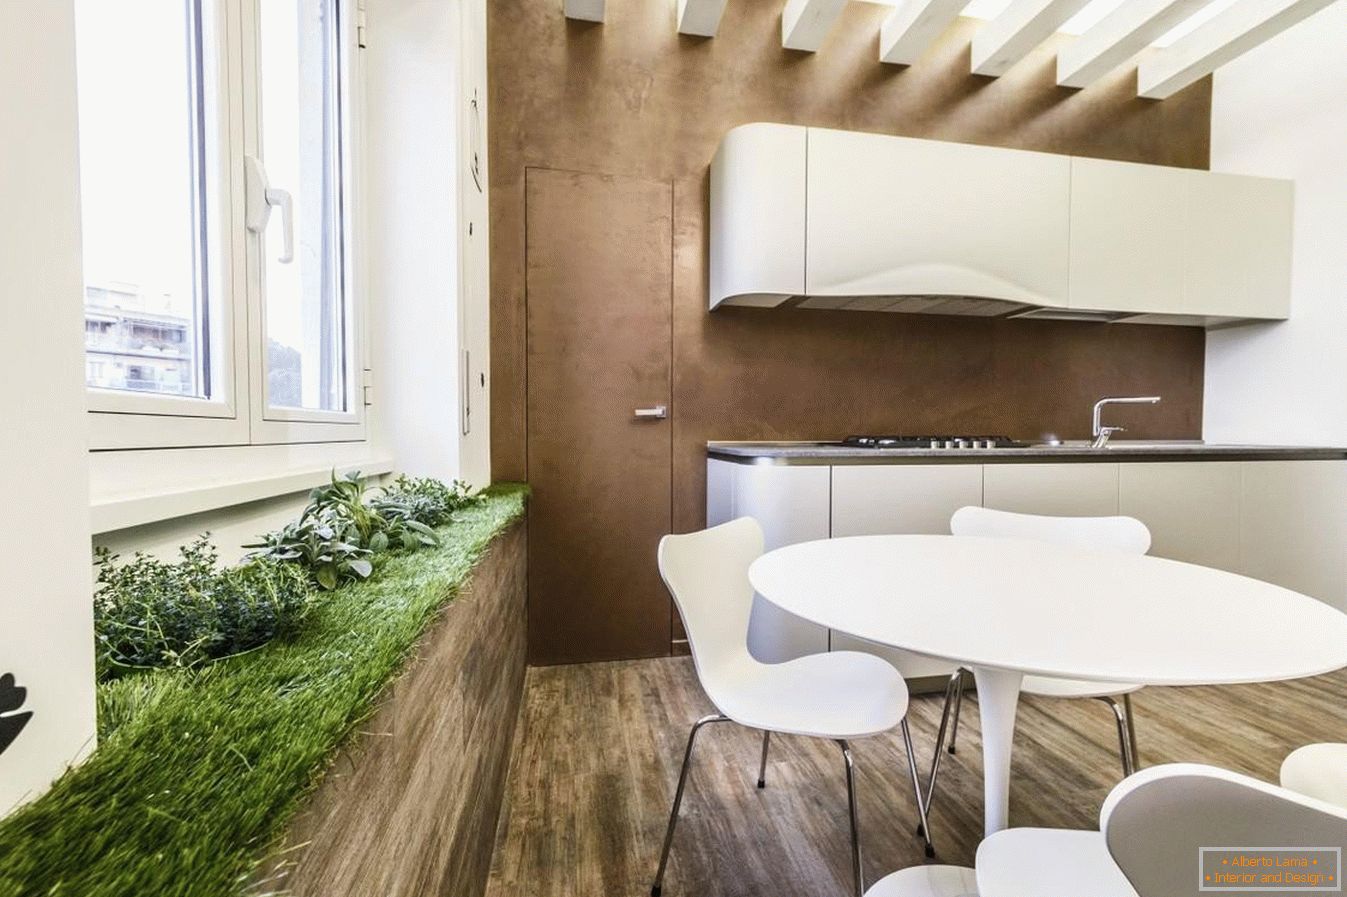 Area verde in cucina per l'eco-stile